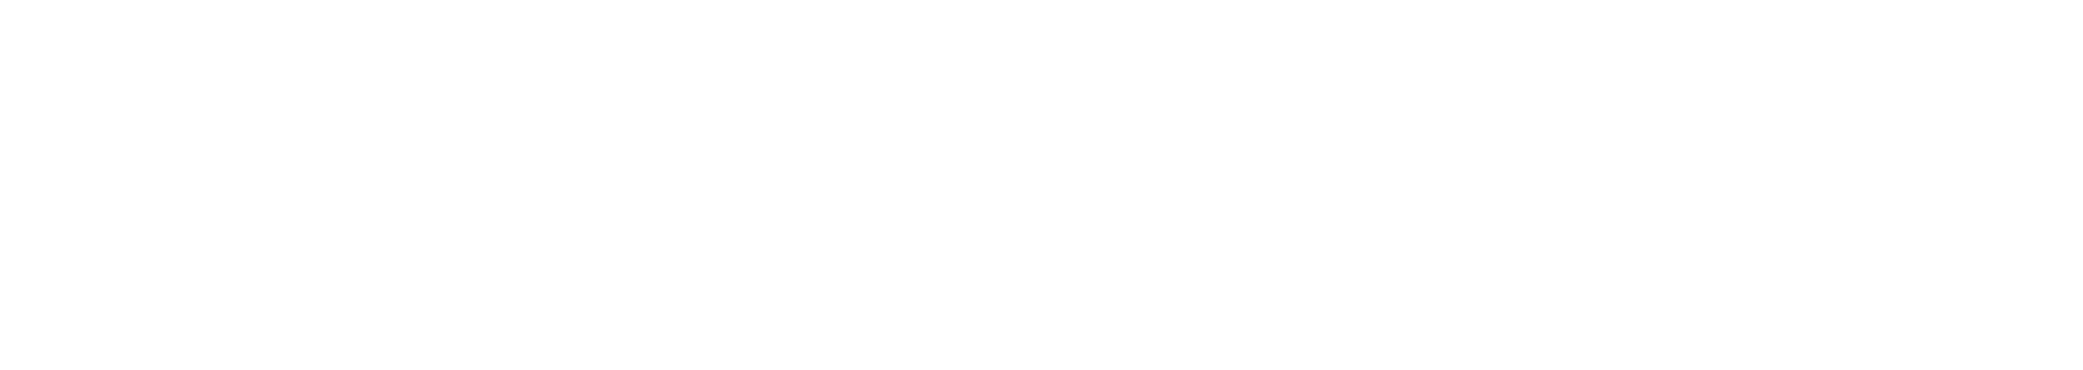 Bluestar/Green house logo